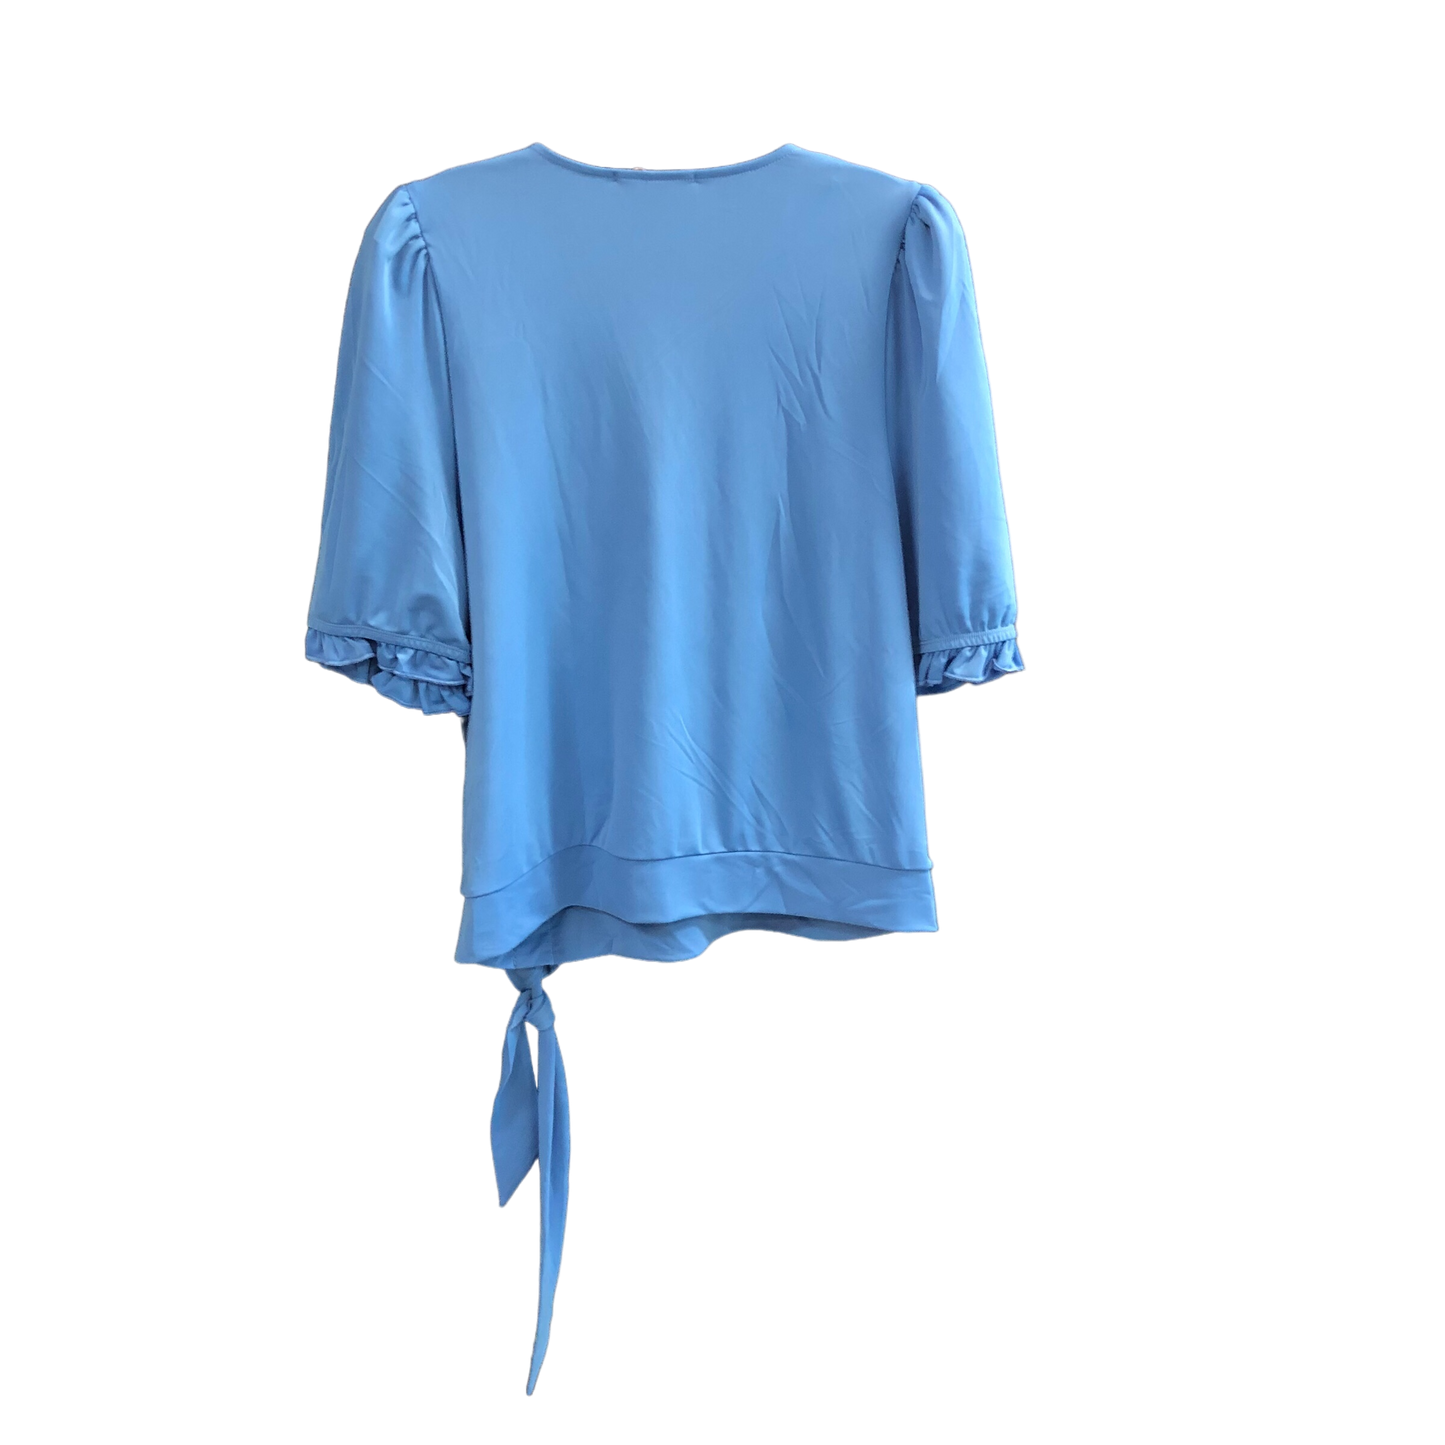 Blue Top Short Sleeve Inc, Size Xl